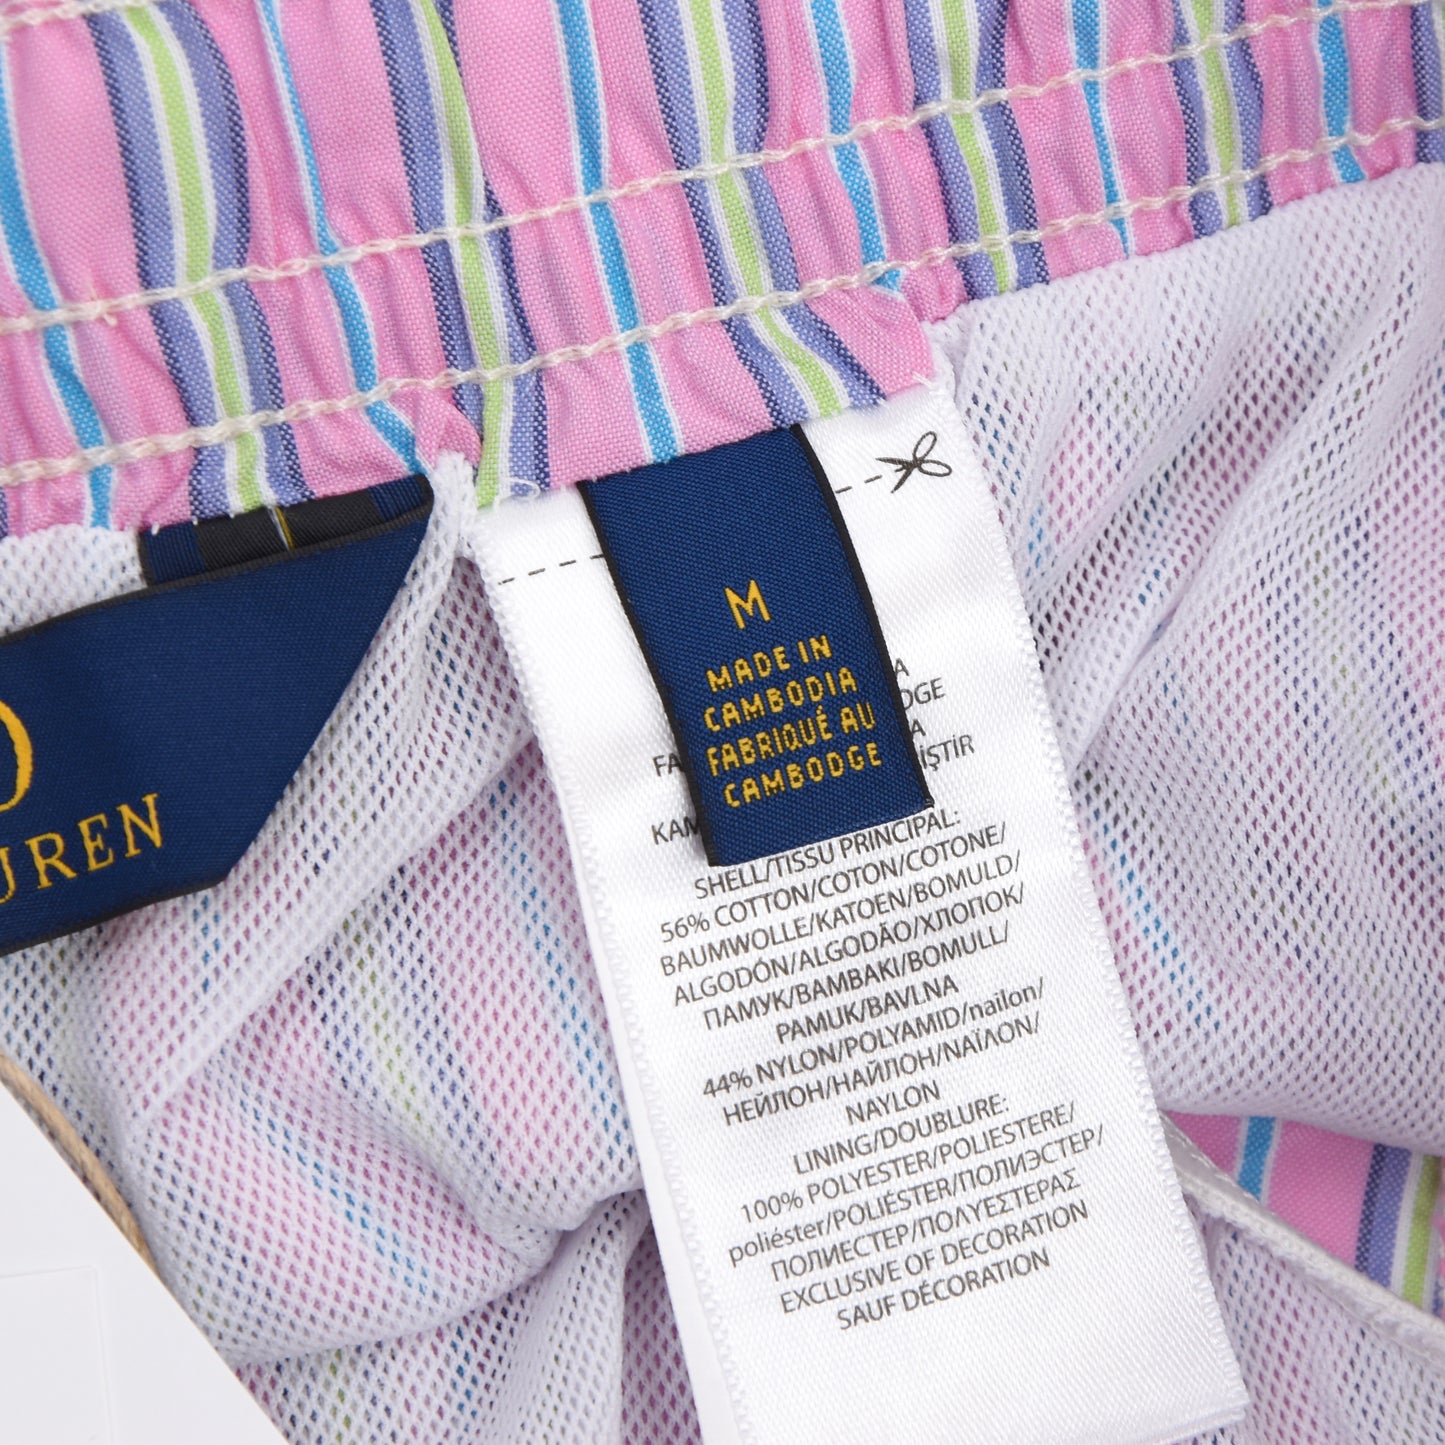 Polo Ralph Lauren Swim Trunks Size M - Pink Stripes